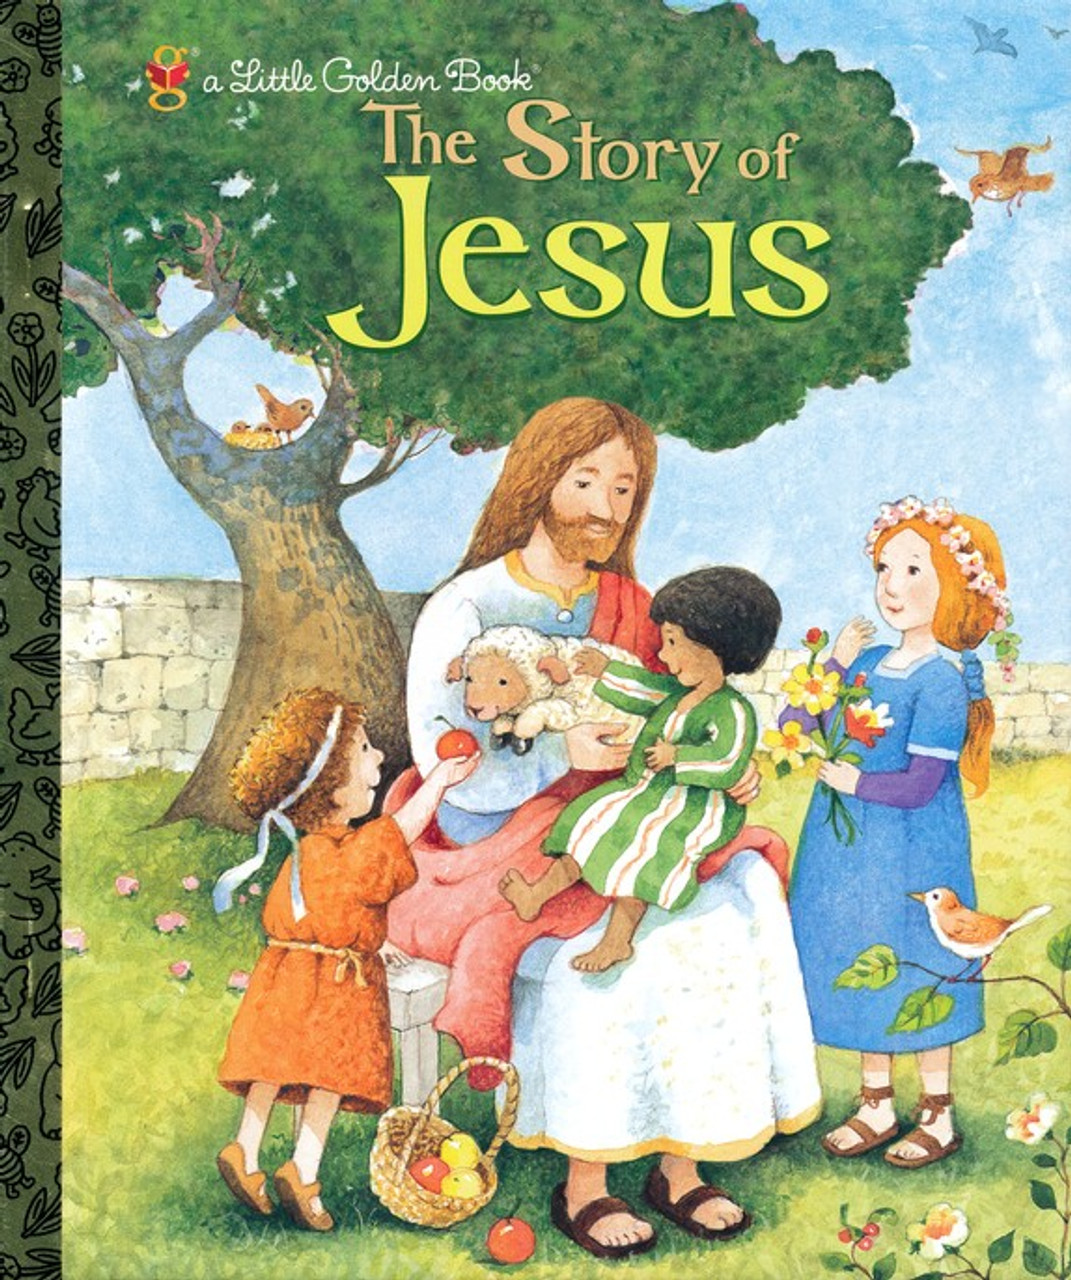 The Story of Jesus, Little Golden Books (9780375839412)